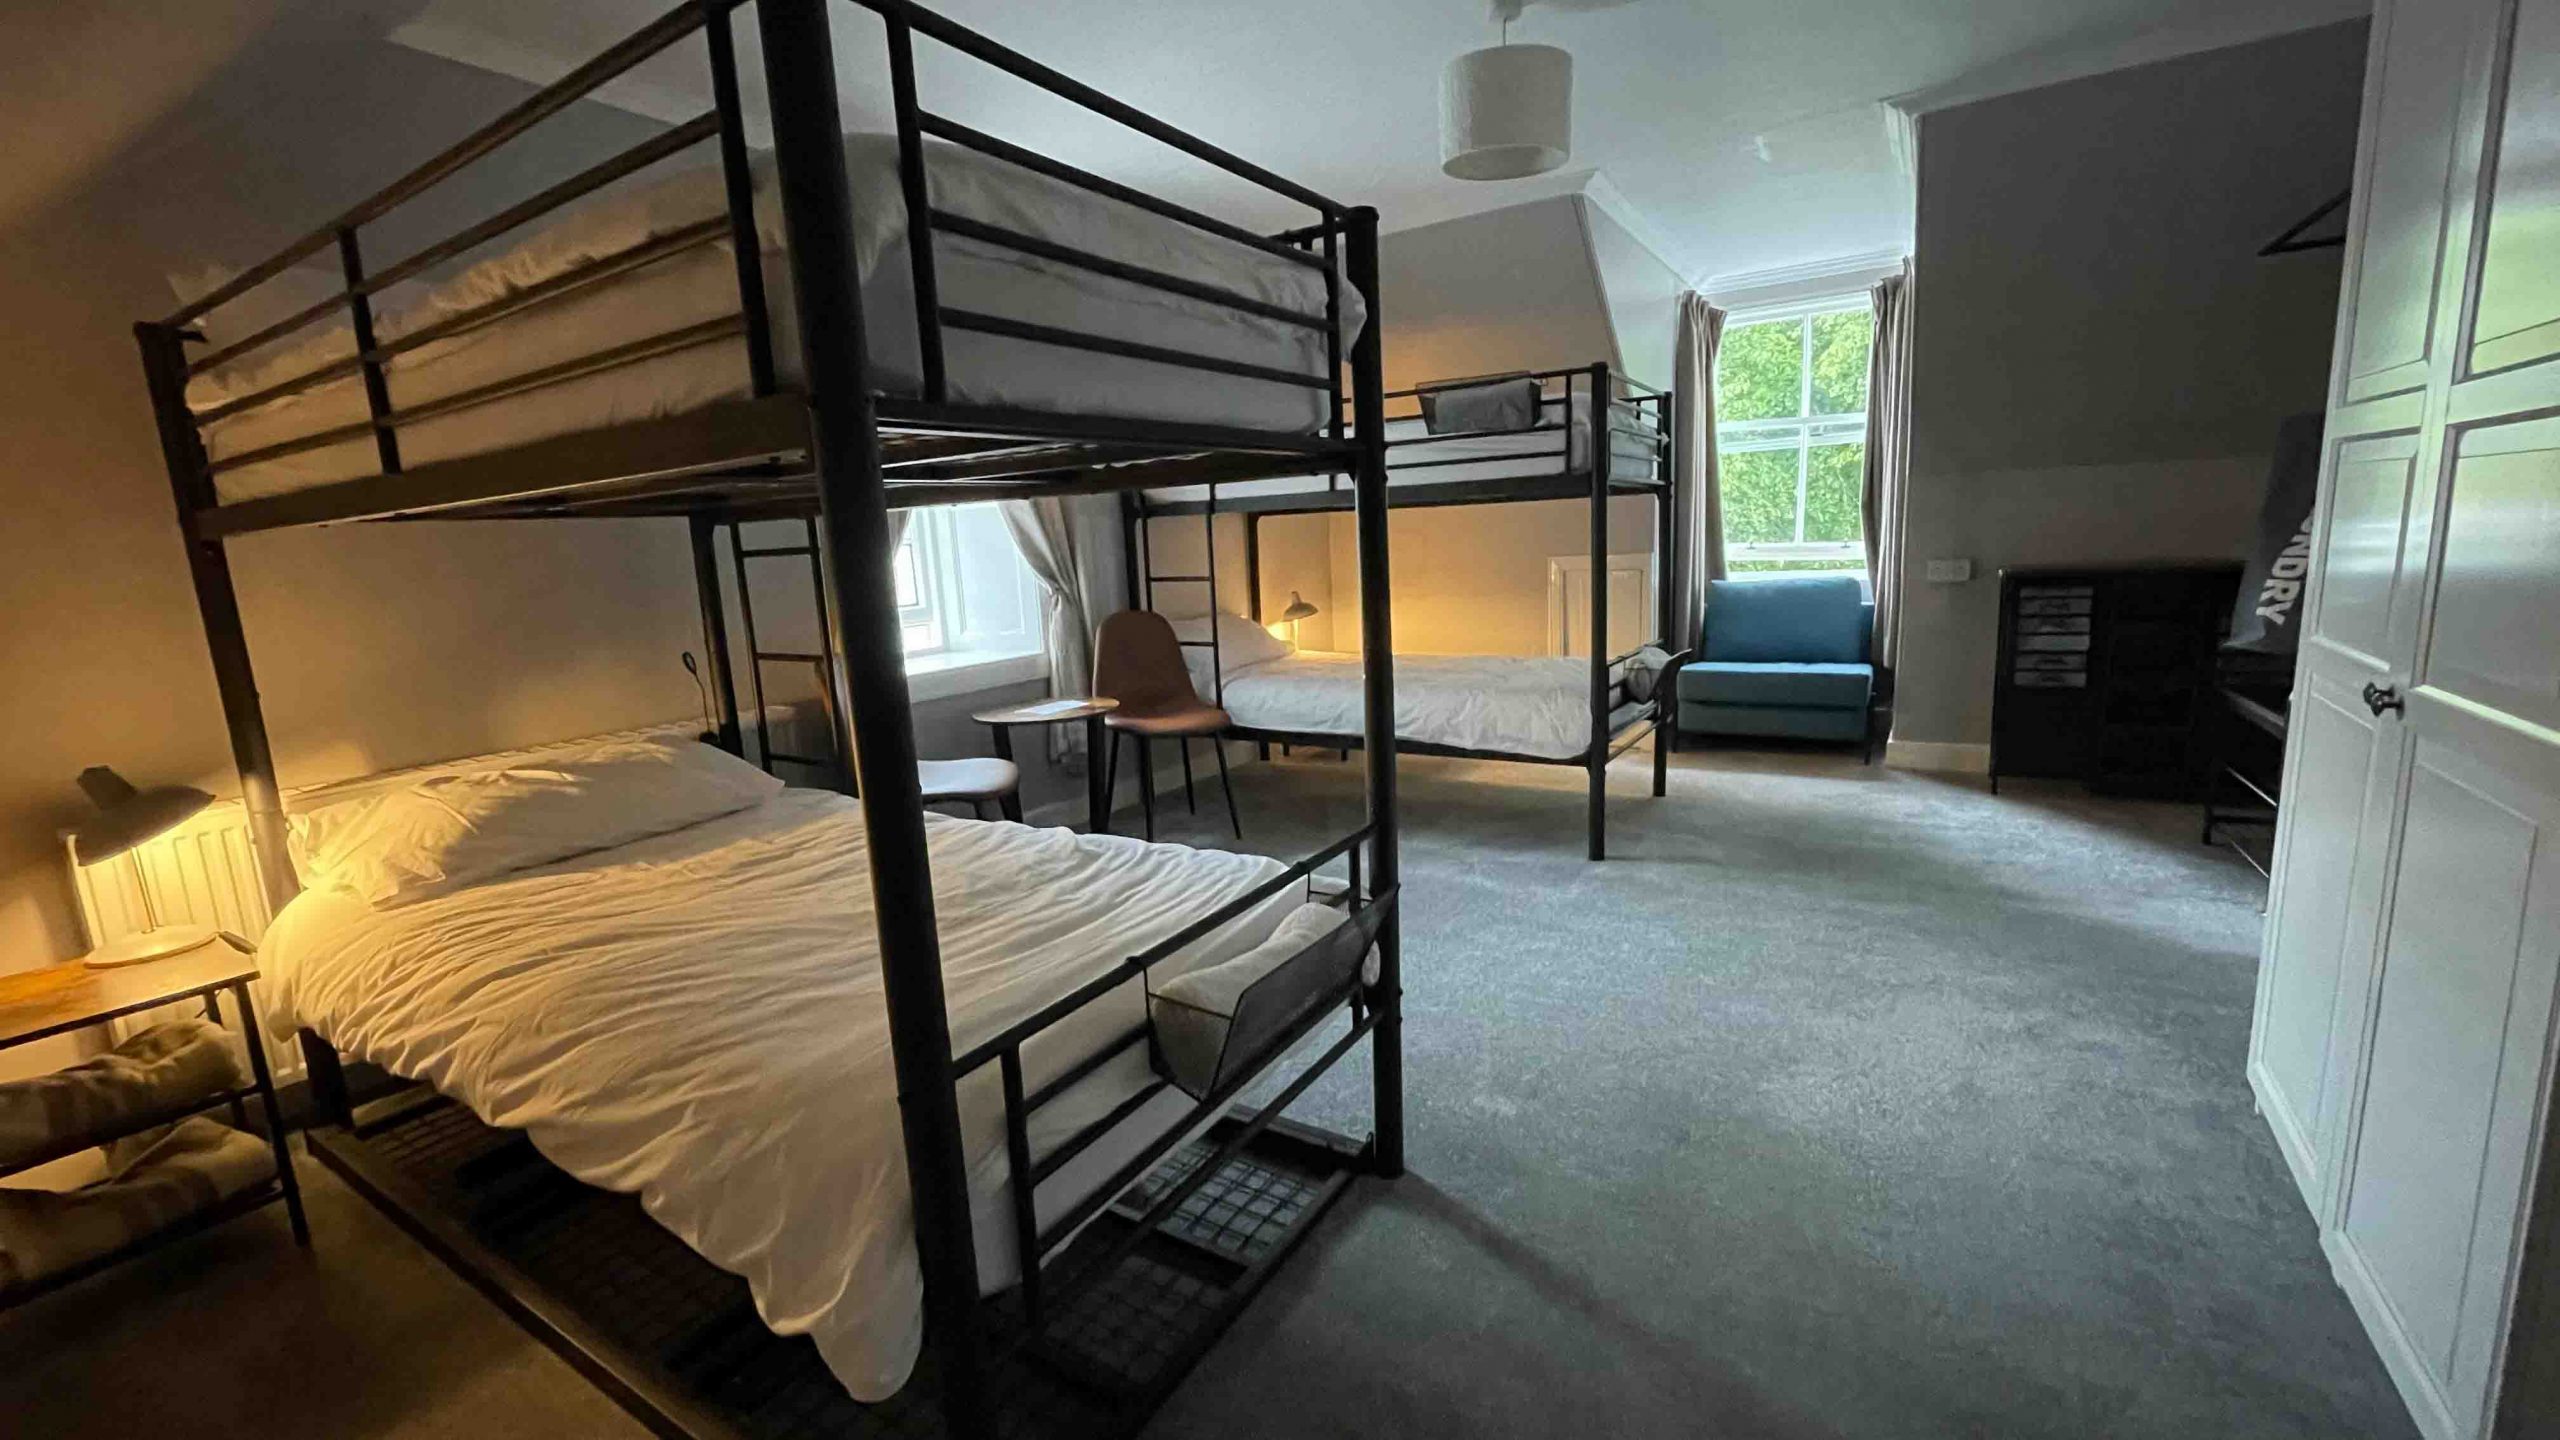 Dorm room at Moffat Independent Hostel, Scotland